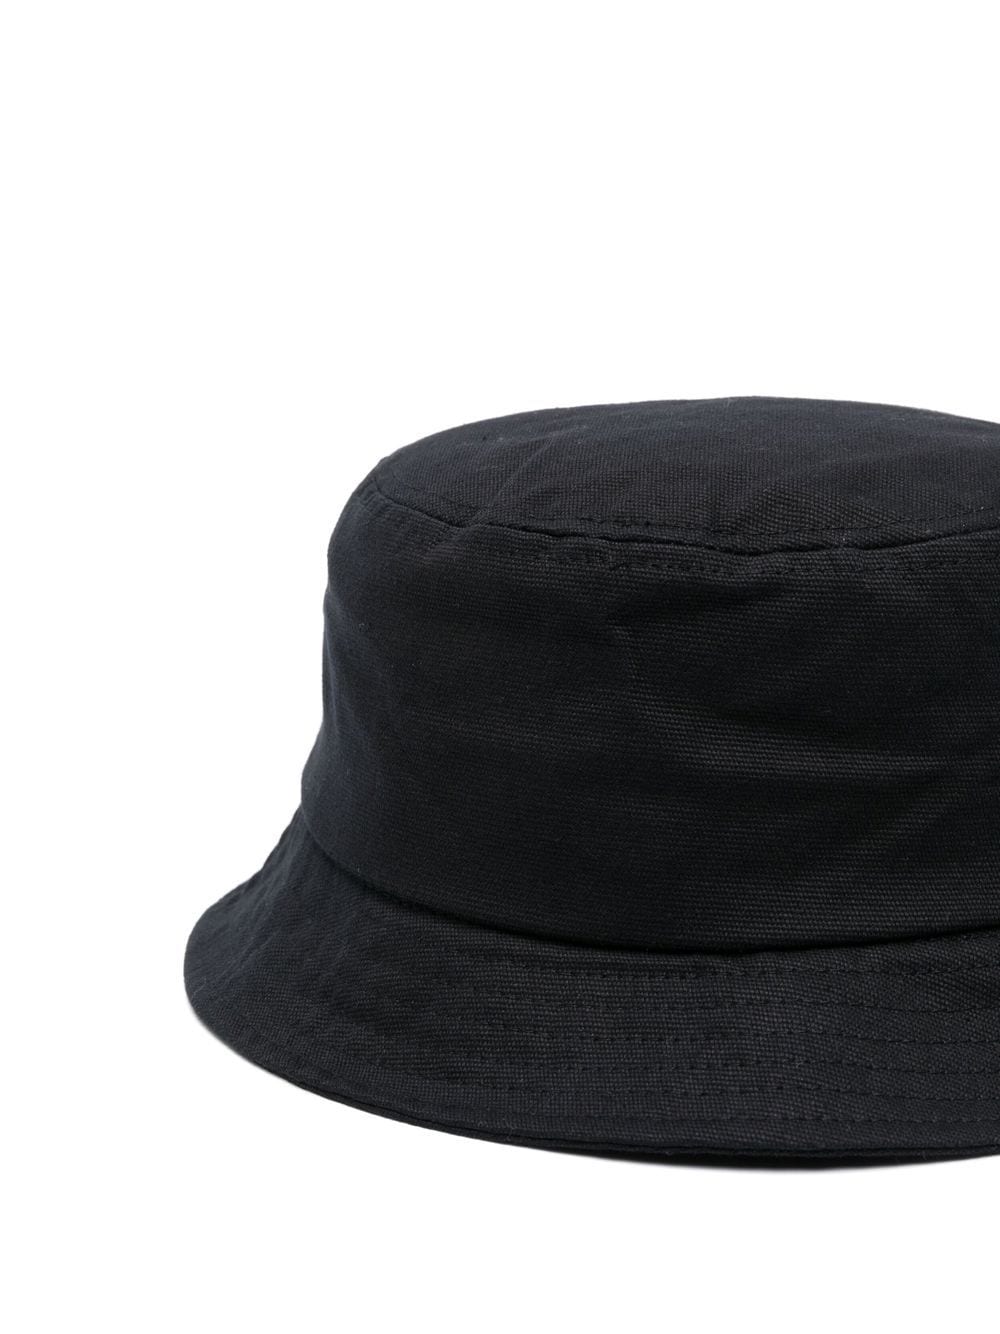 Kenzo Hats Black Hats Kenzo - LOLAMIR